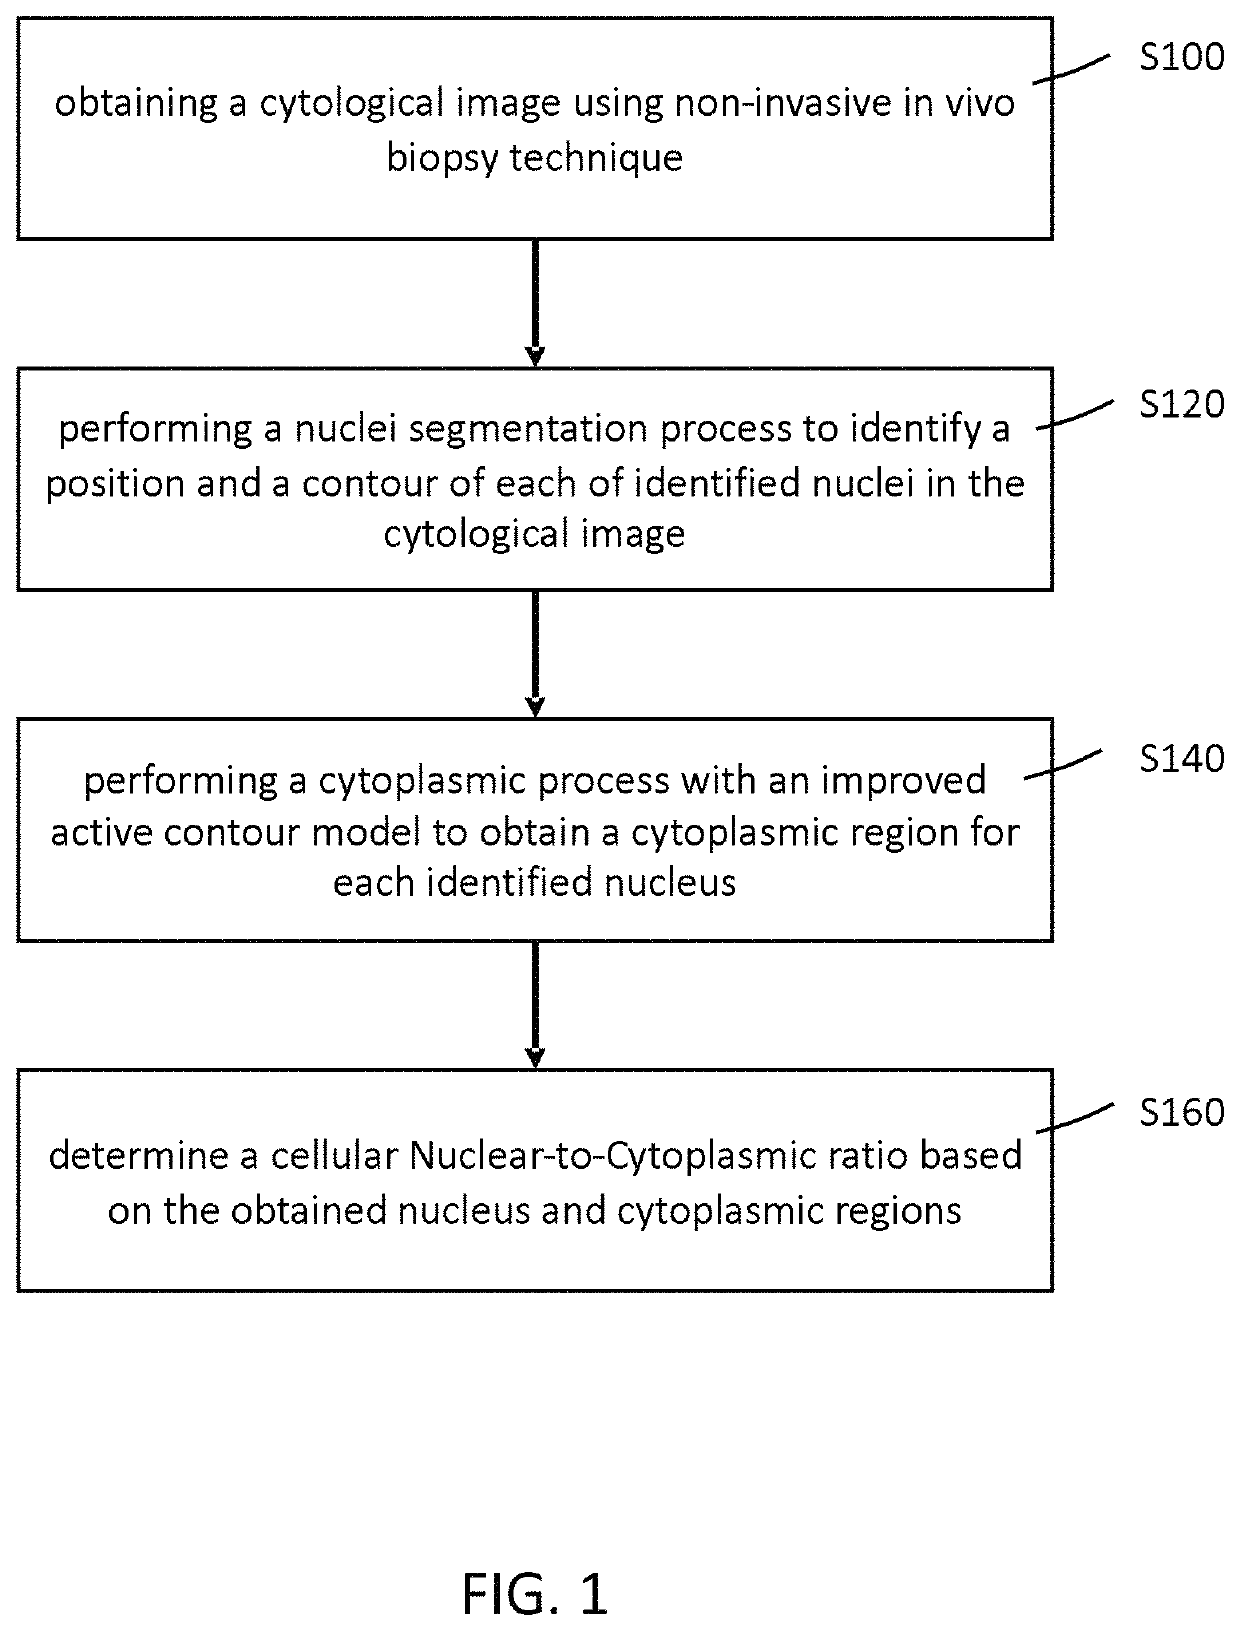 Method for determining cellular nuclear-to-cytoplasmic ratio